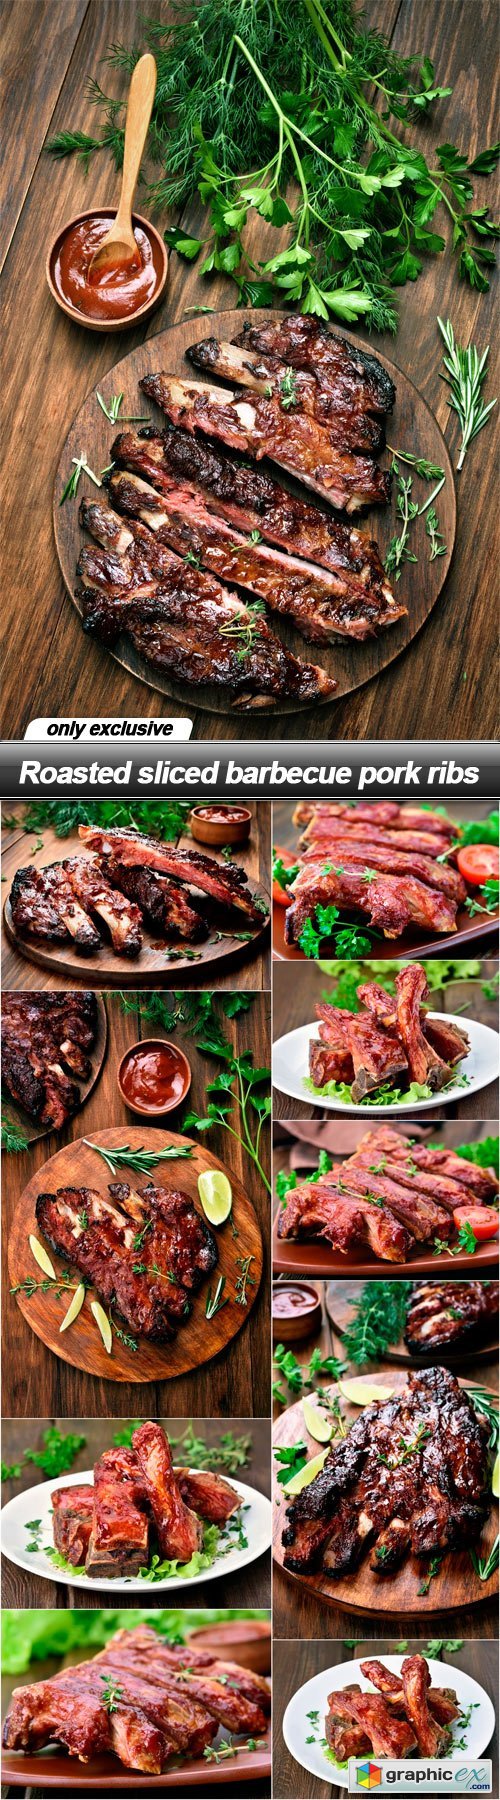 Roasted sliced barbecue pork ribs - 10 UHQ JPEG